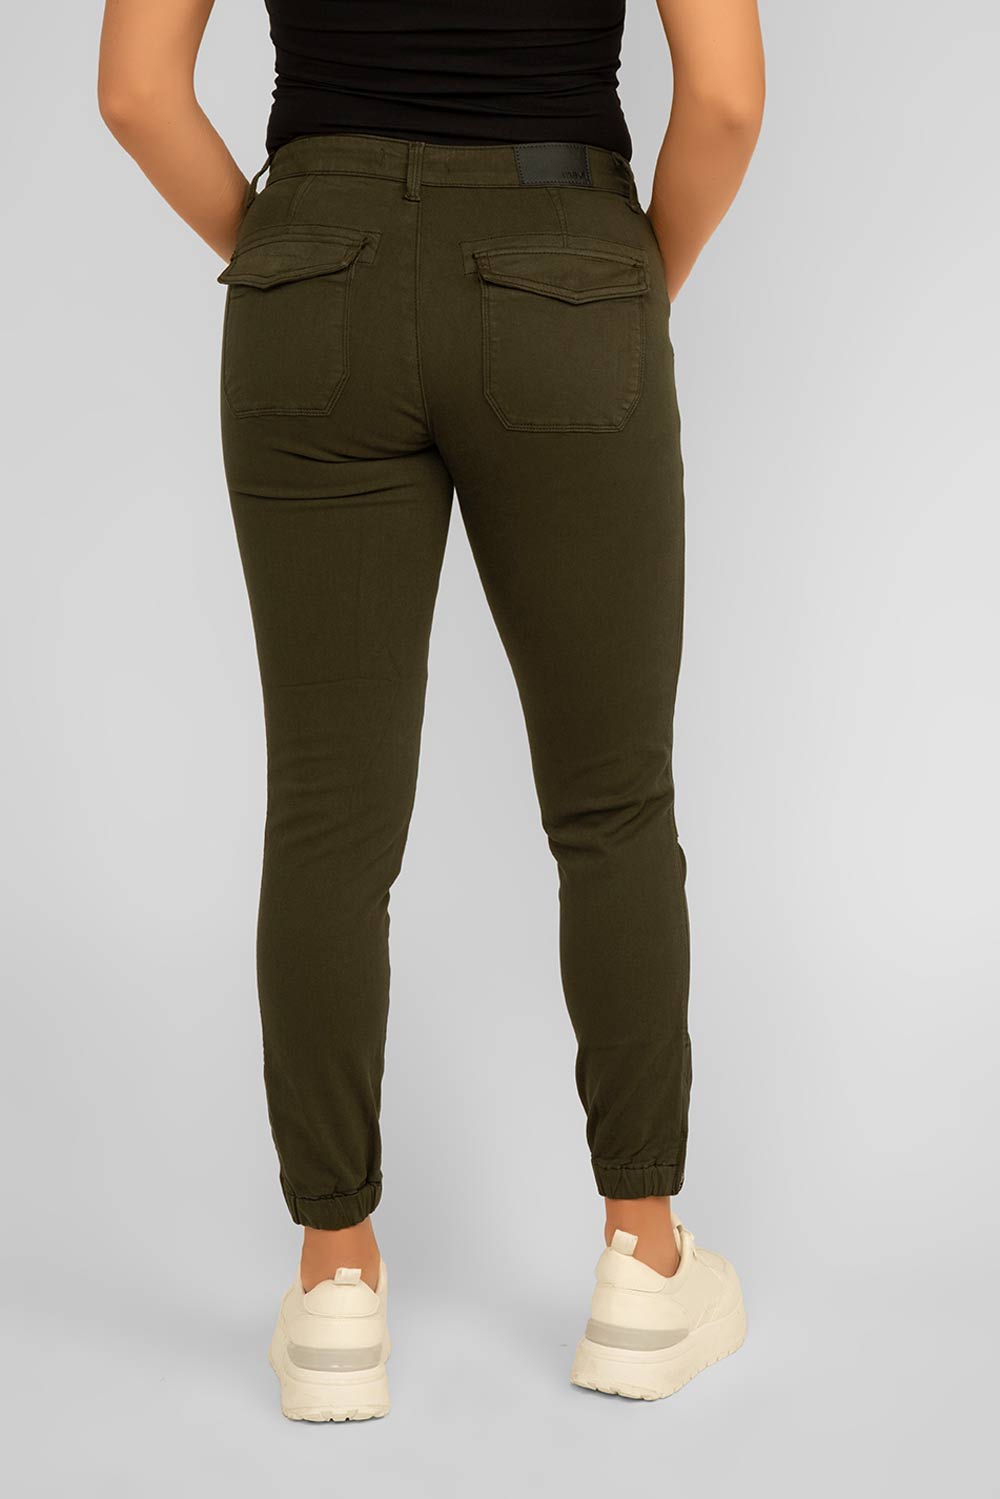 MAVI JEANS - Mavi Ivy Slim Cargo Pants - Black Twill - Women's Clothing & Accessories 